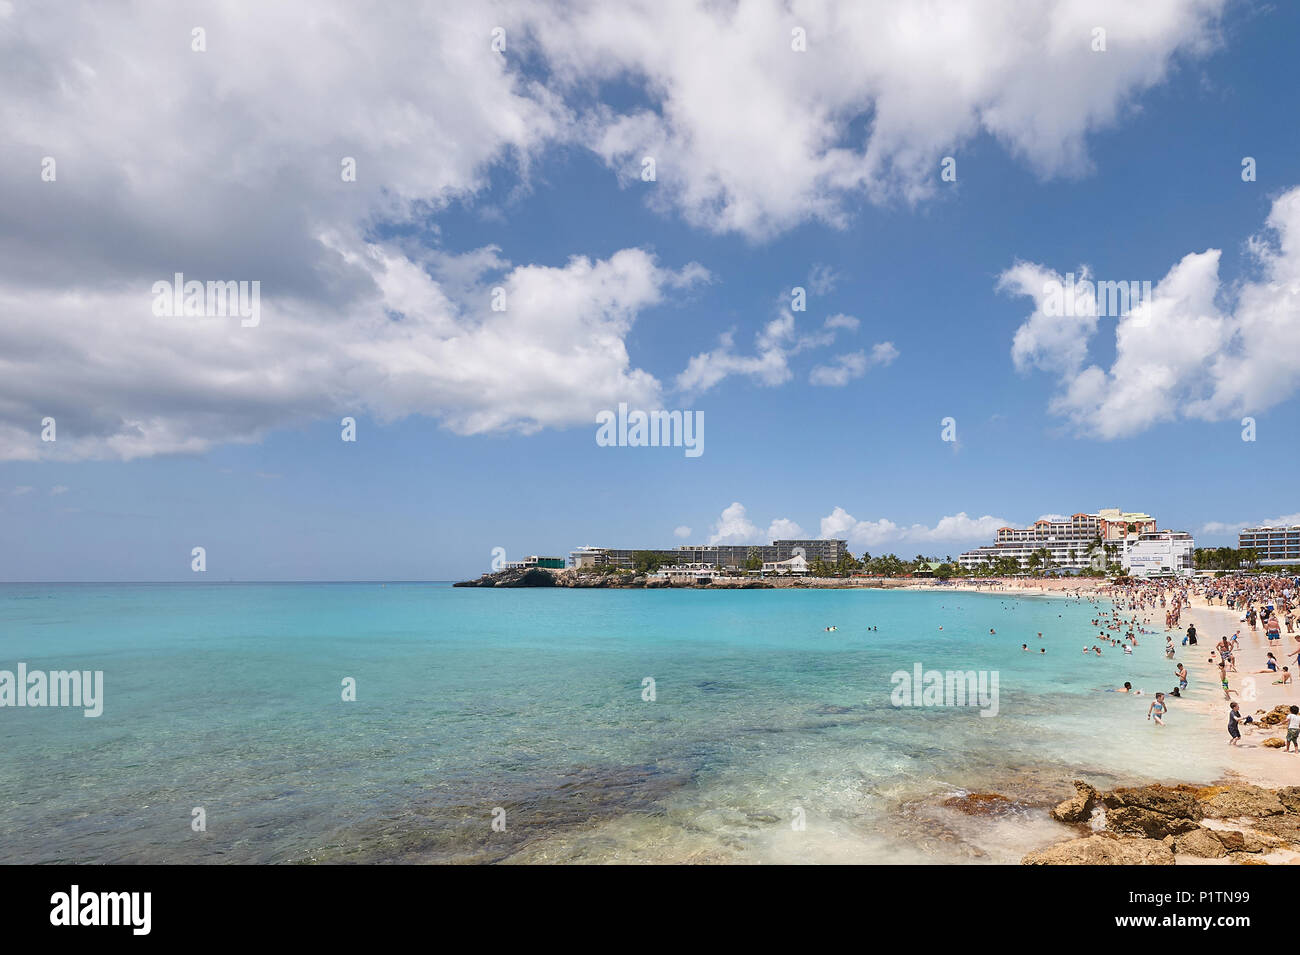 New york, USA - March 17, 2015: People on St Maarten island beach on sunny bright day Stock Photo